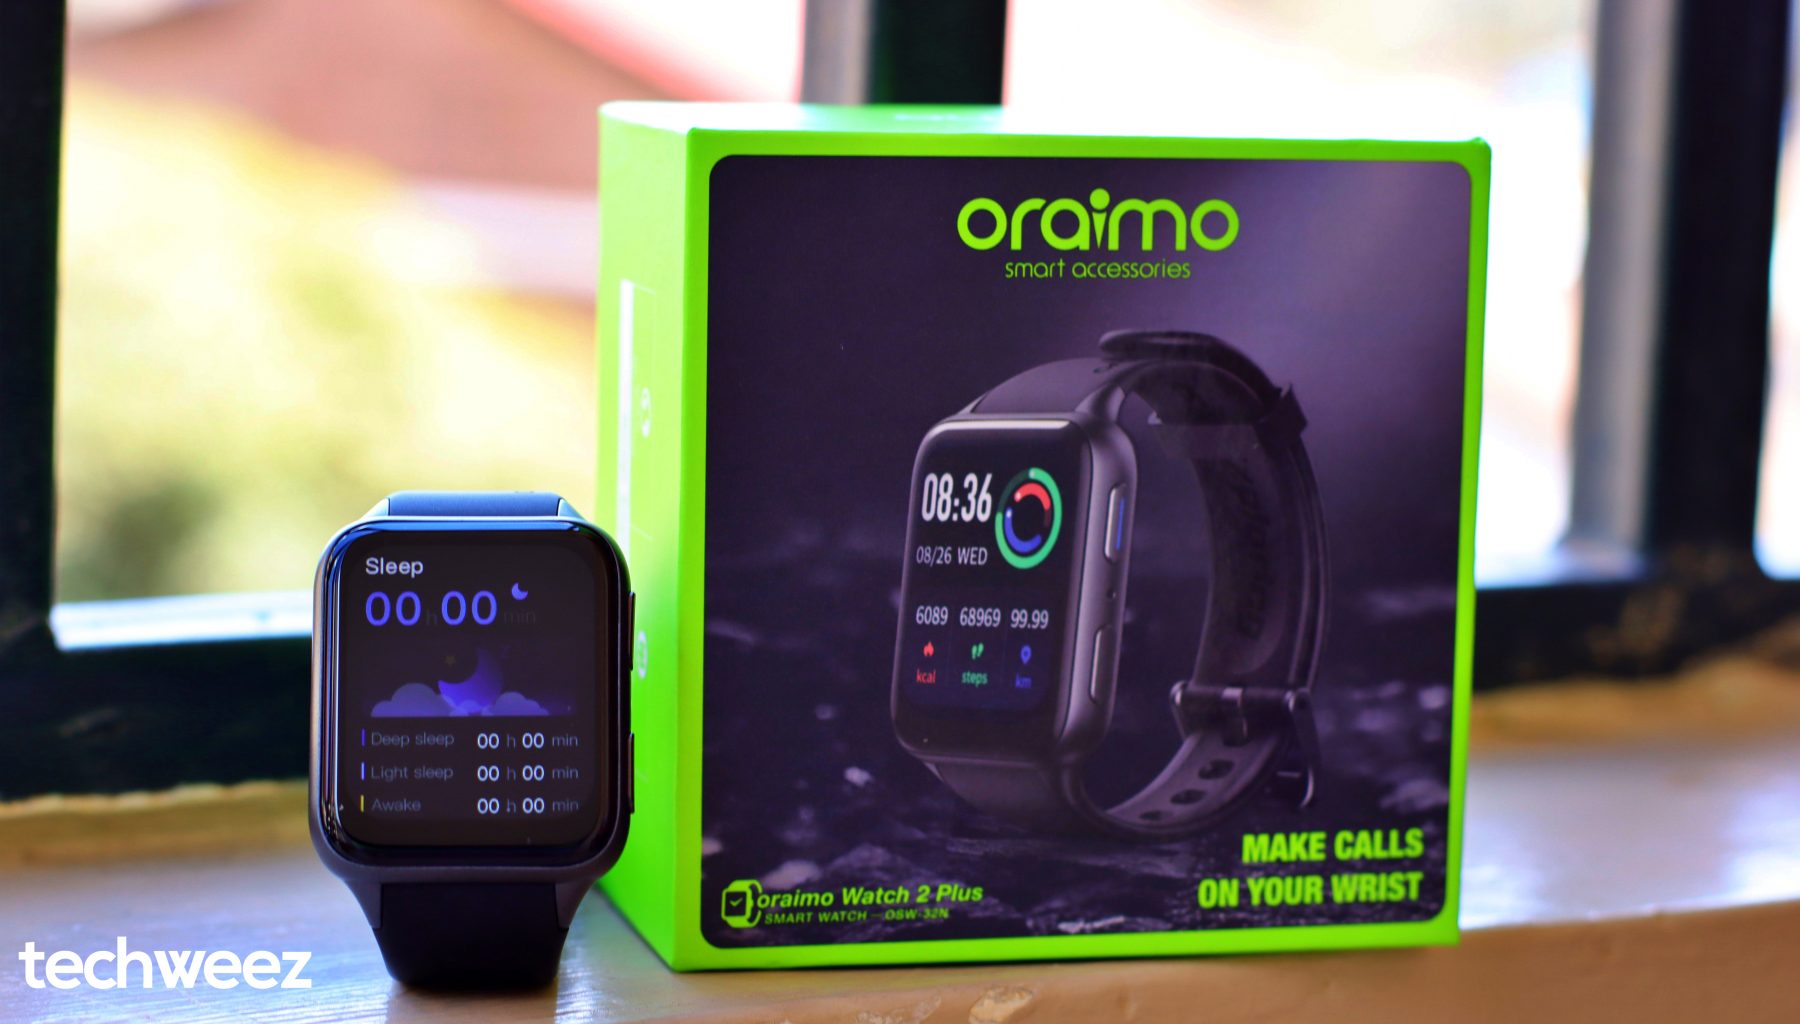 Oraimo Watch 2 Plus Sleep Tracker